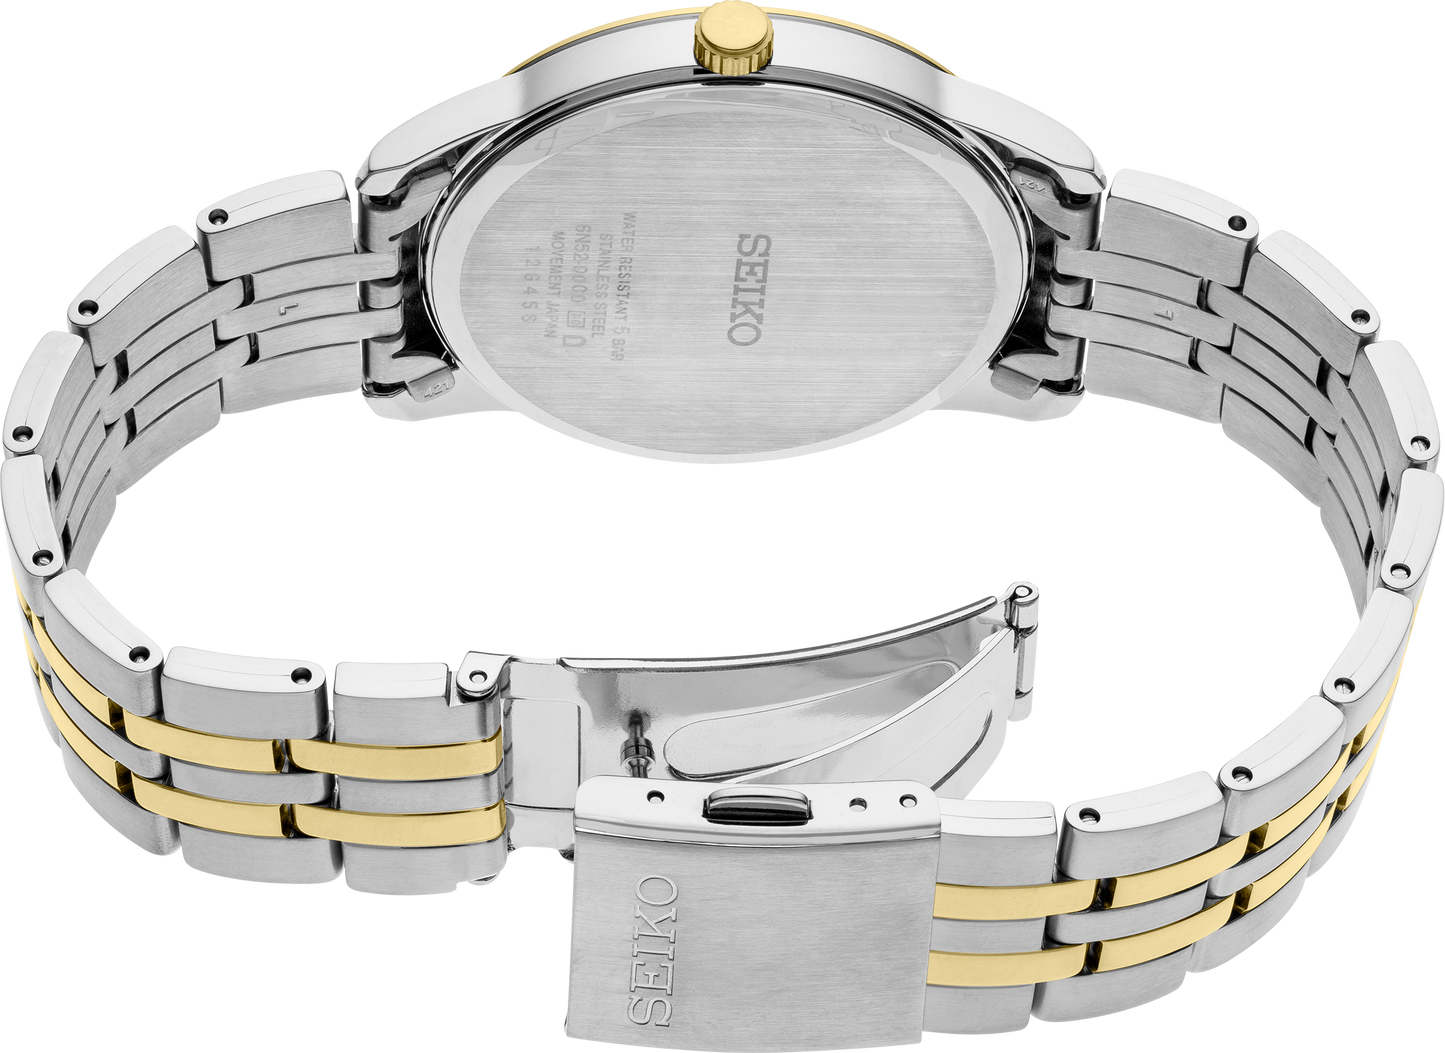 SEIKO Essential Quartz White Dial Men's Watch SUR402